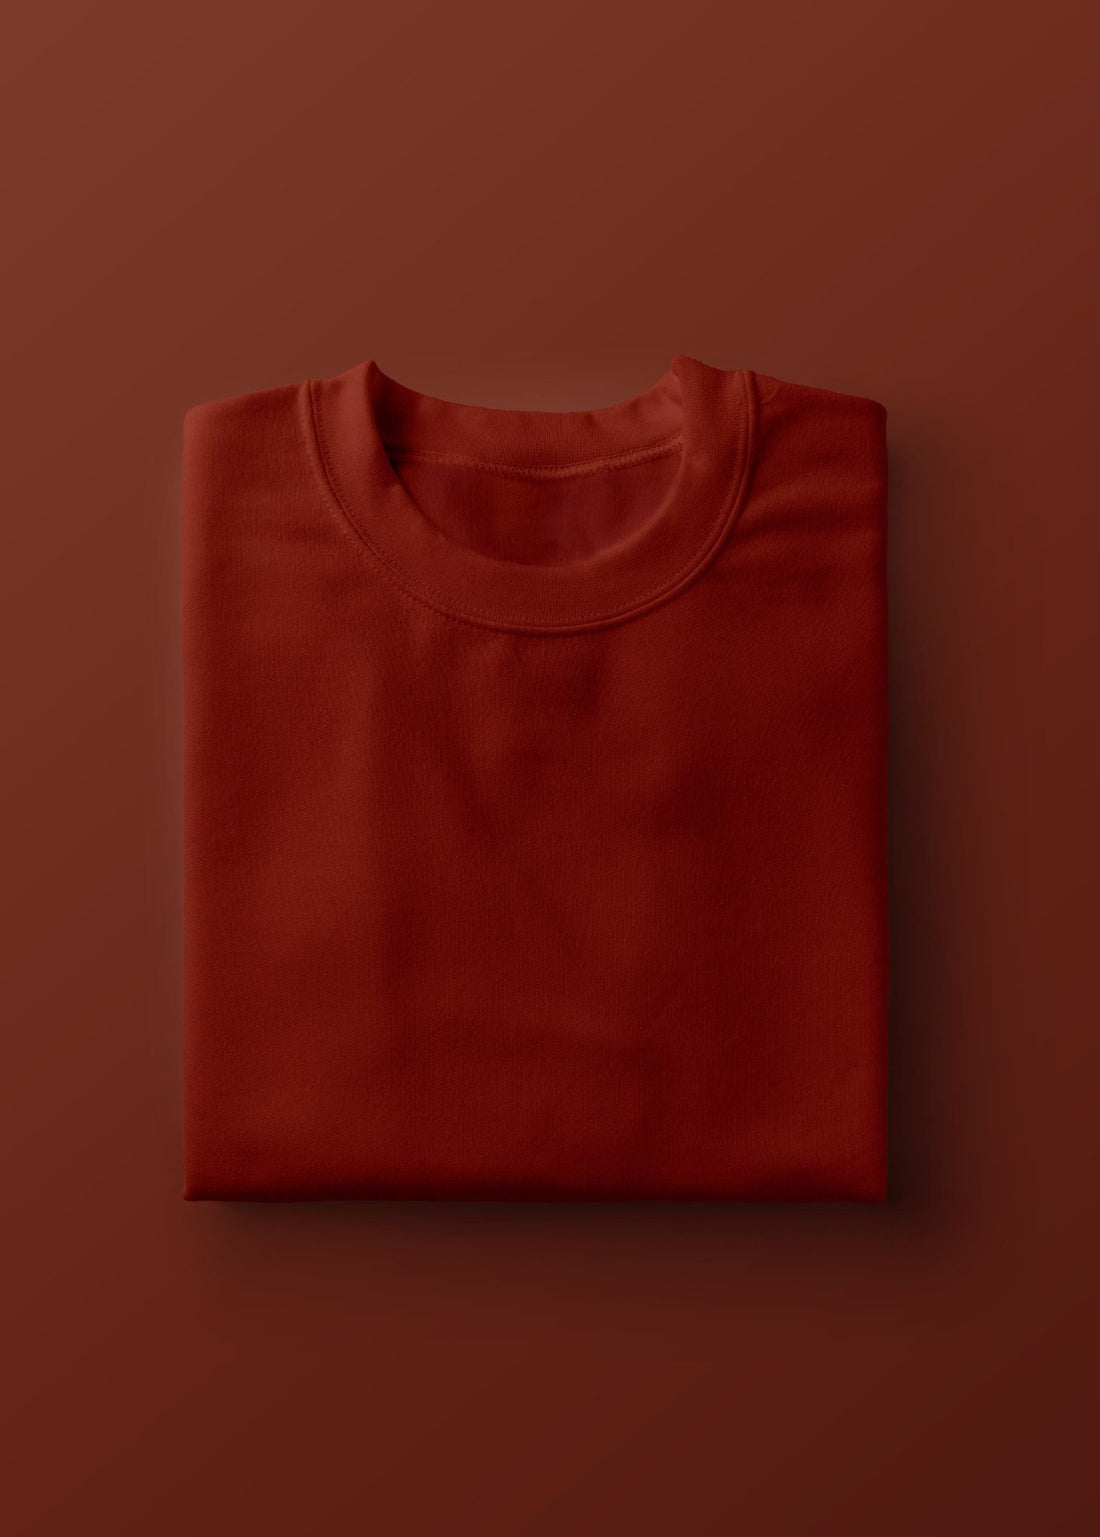 Plain Brick Red T-Shirt